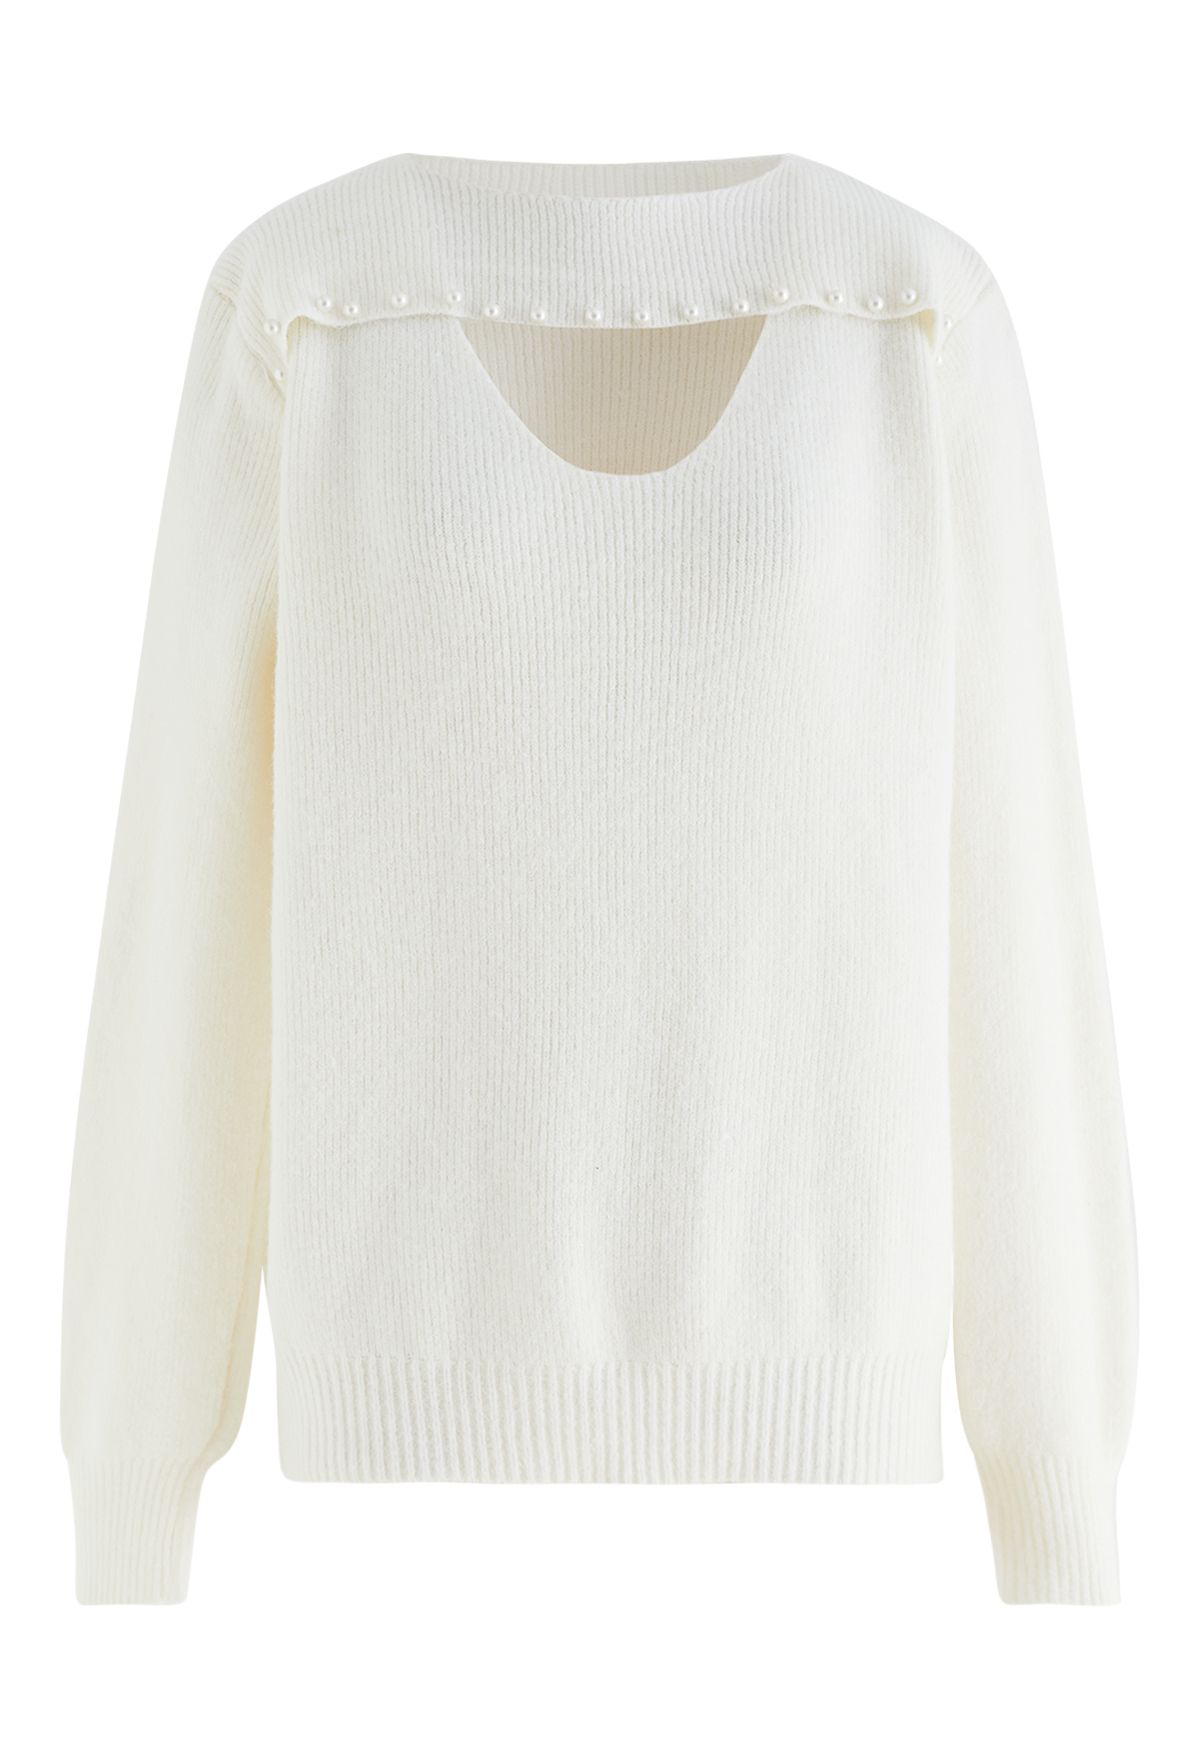 Cutout Pearl Neckline Knit Sweater in White - Retro, Indie and Unique ...